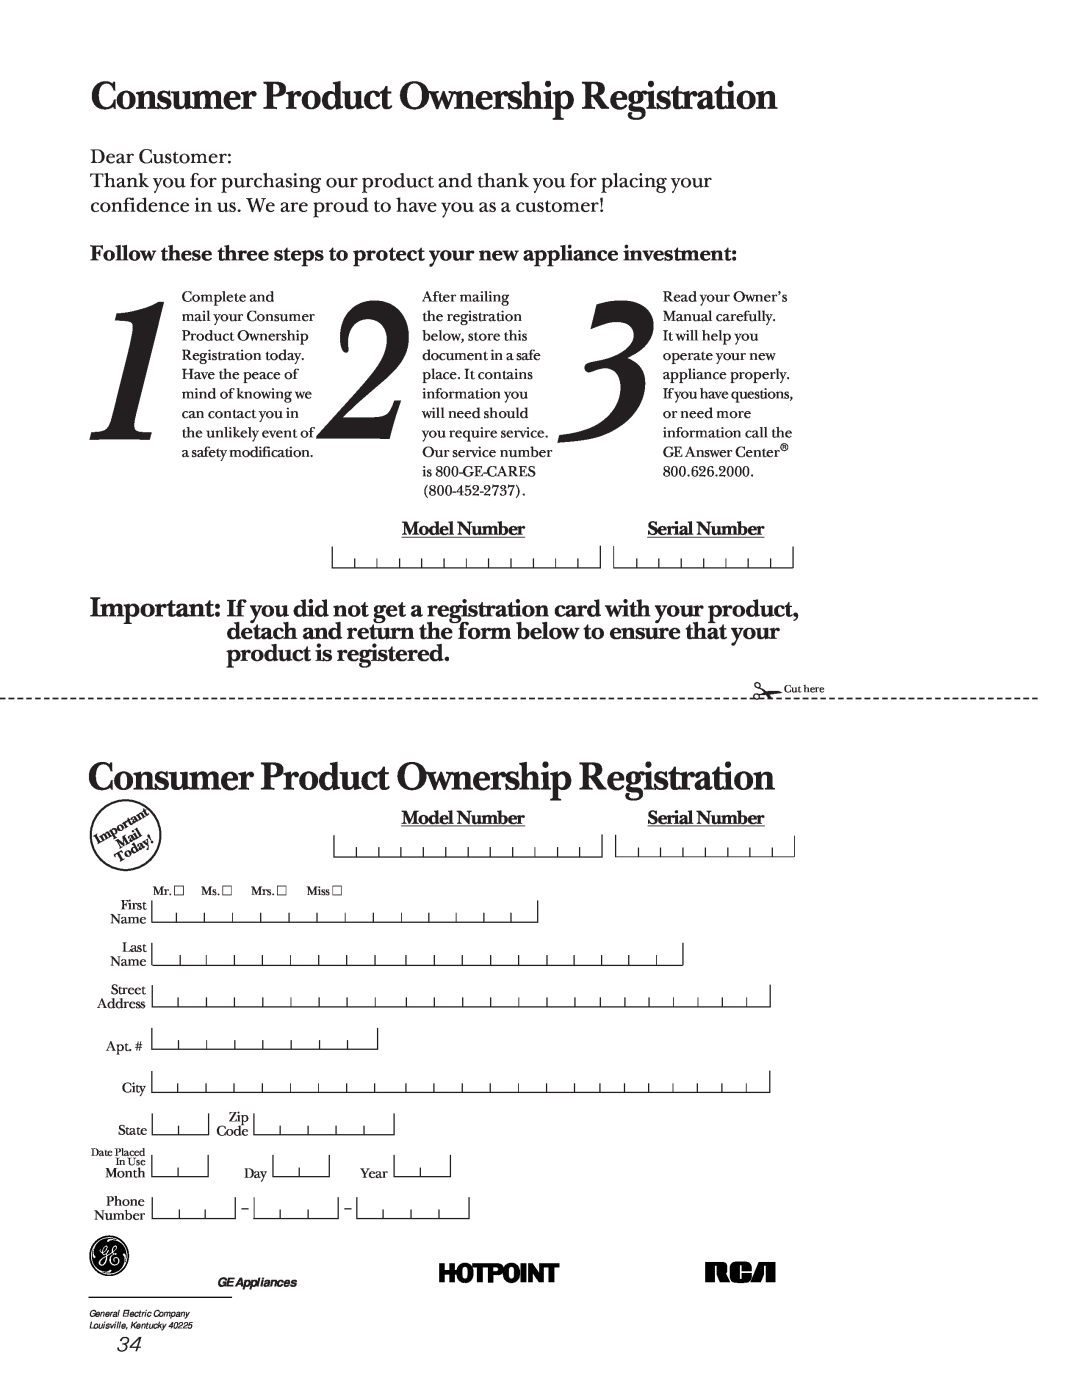 GE JE1390 owner manual Consumer Product Ownership Registration, Model Number, Serial Number, GE Appliances 